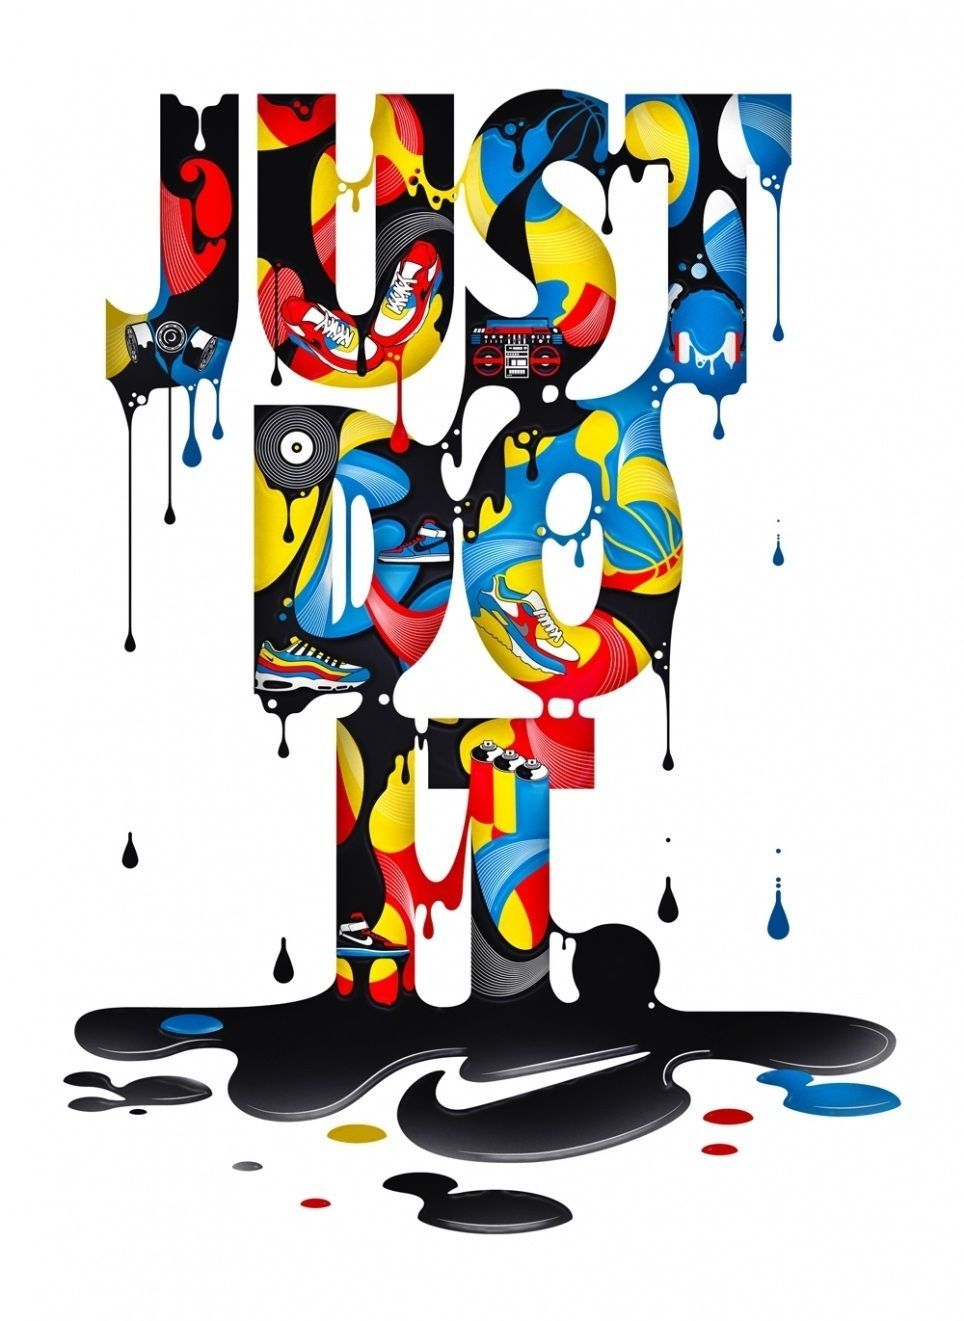 Nike Swoosh Just Do It Logo Wallpapers On Wallpaperdog